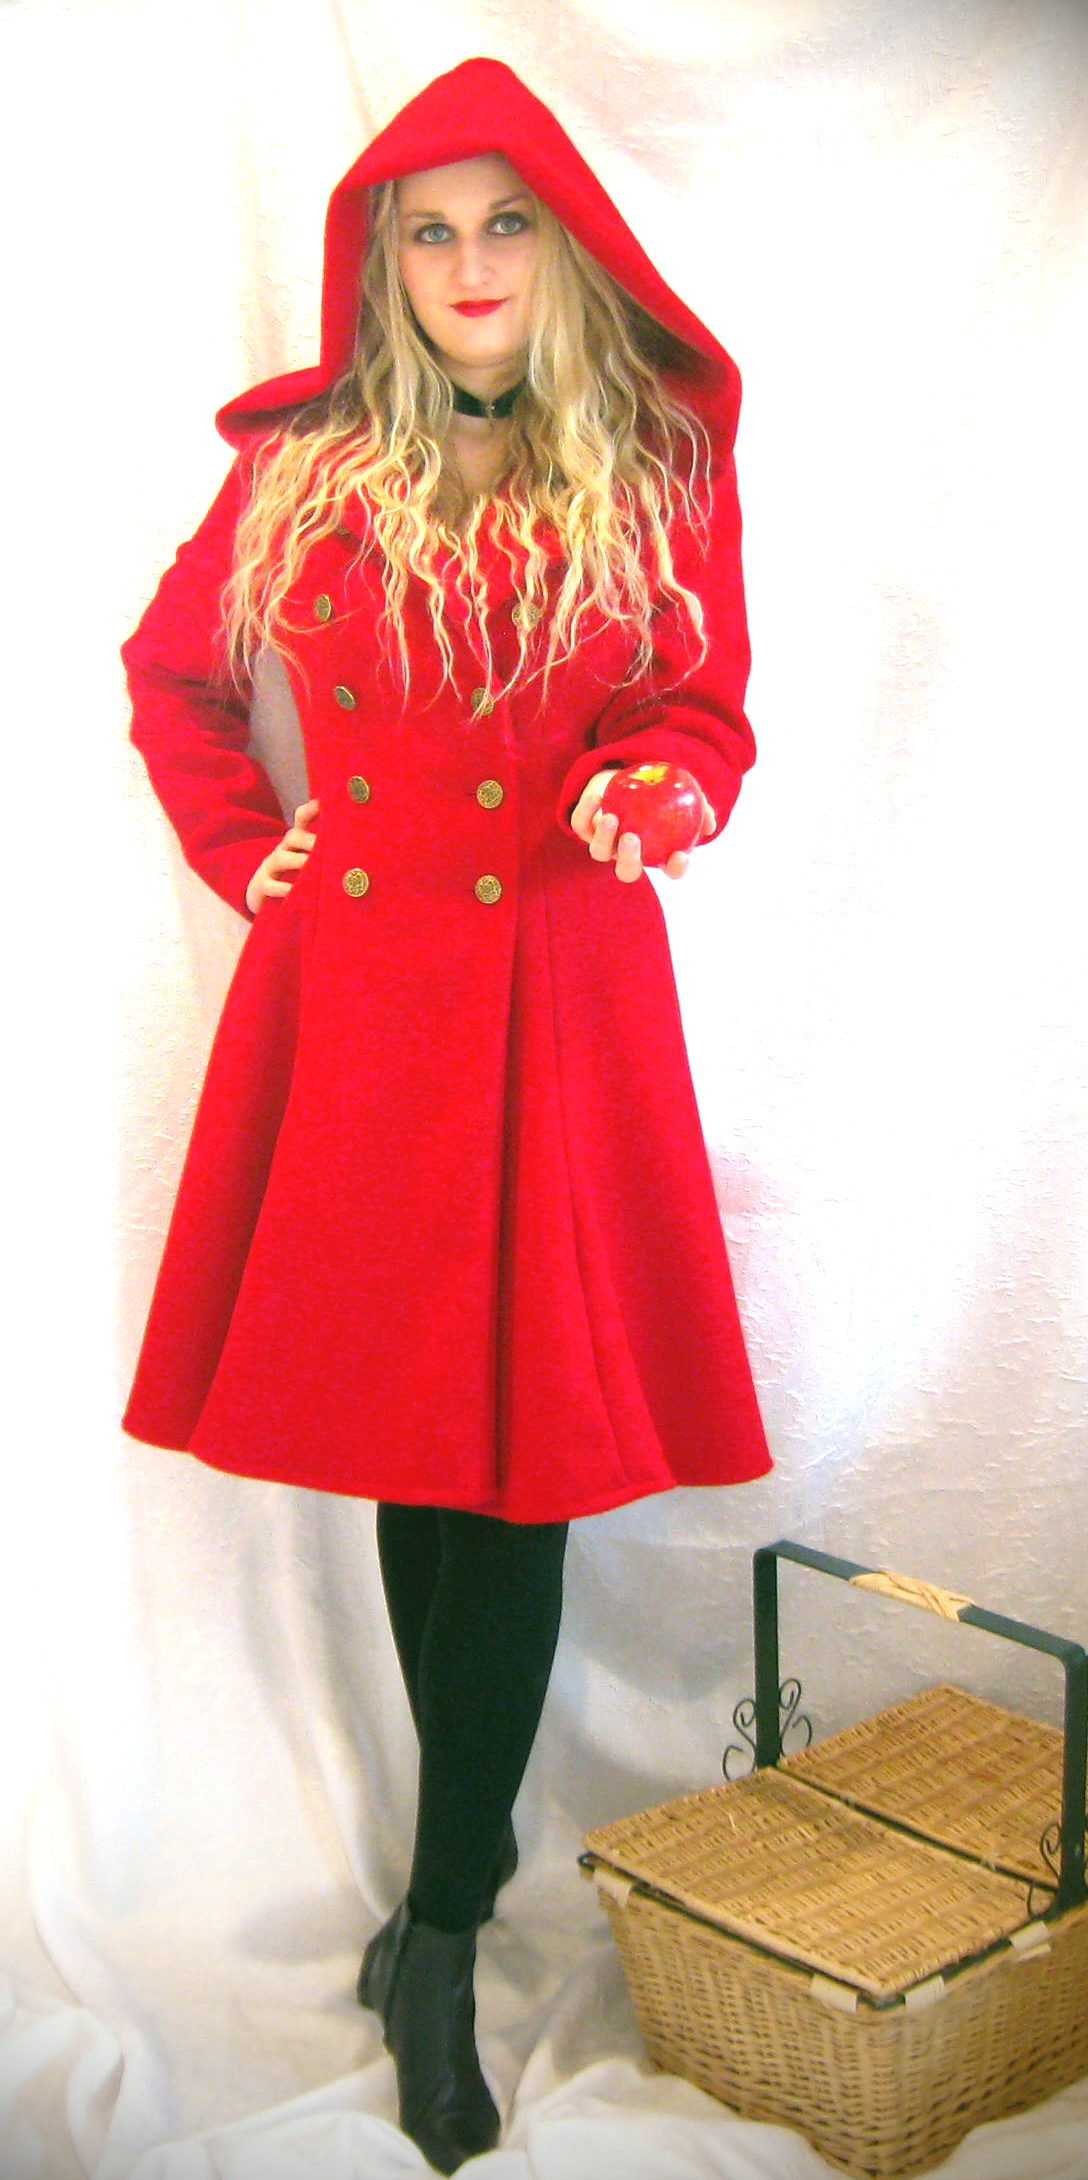 Red Riding Hood coat by ThreeRingCinema on DeviantArt